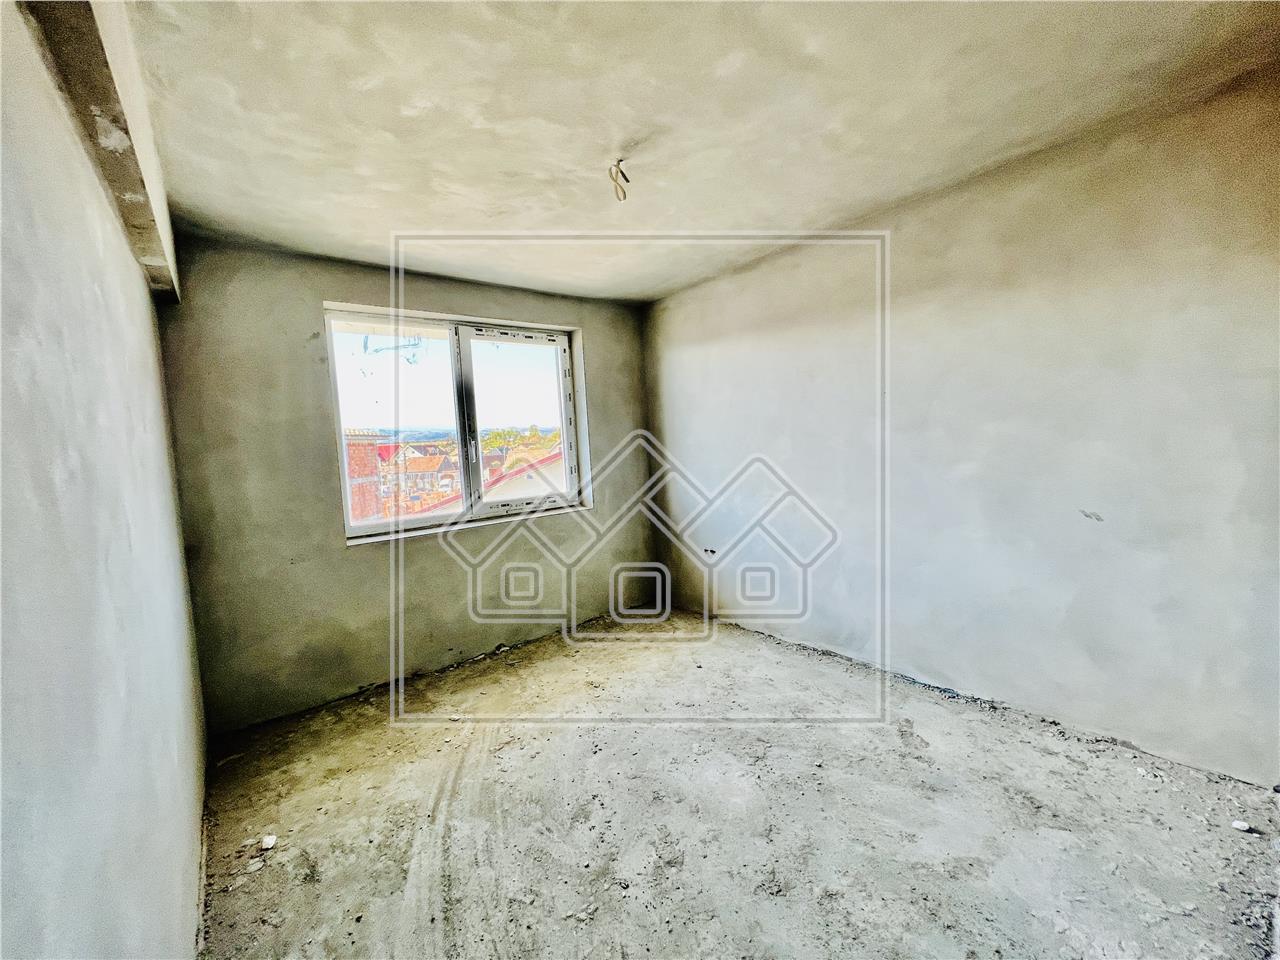 Wohnung zu verkaufen in Sibiu - Selimbar - neuer Komplex - 1. Stock